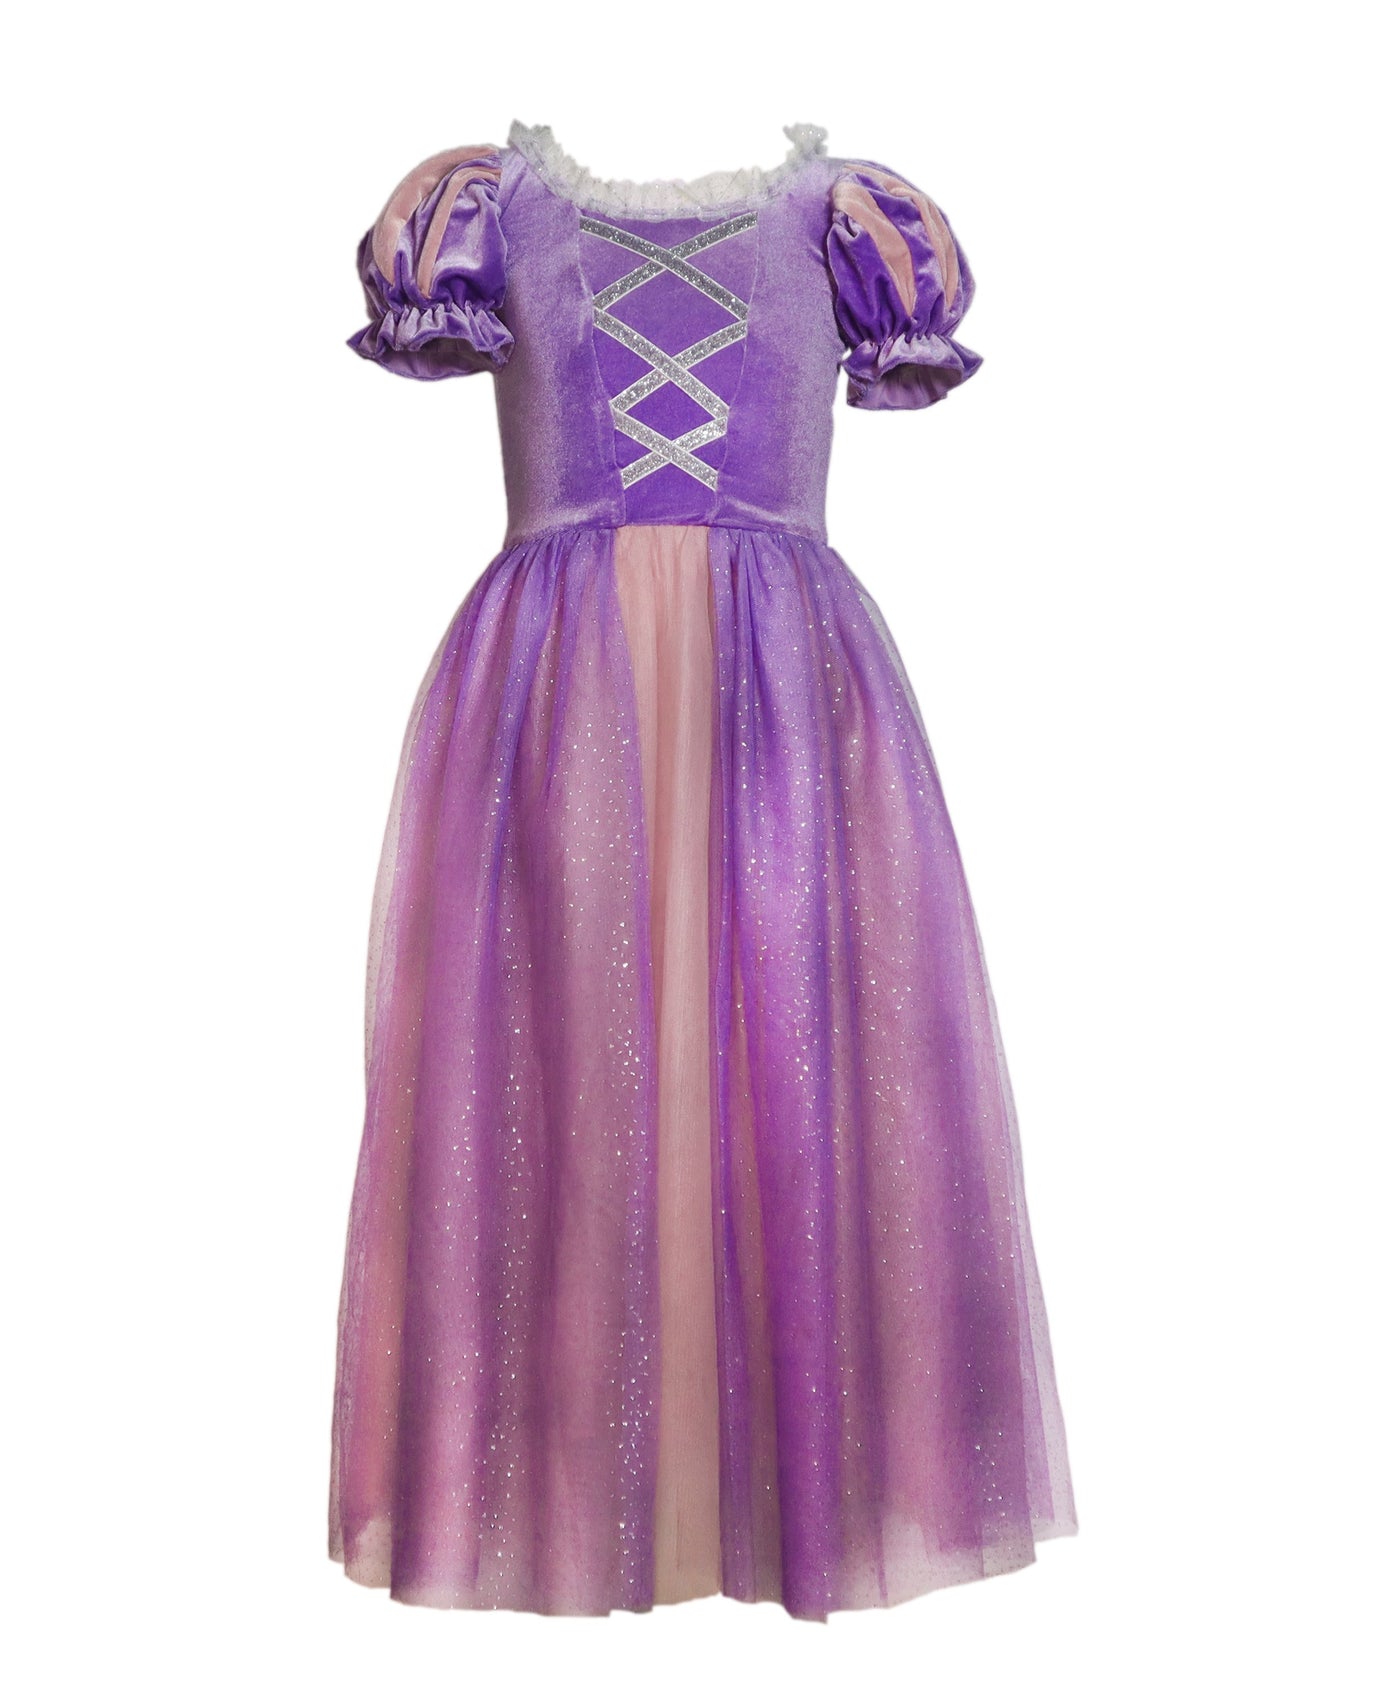 Teresita Orillac - Princess Rapunzel Purple Costume Dress - Two Little Birds Boutique